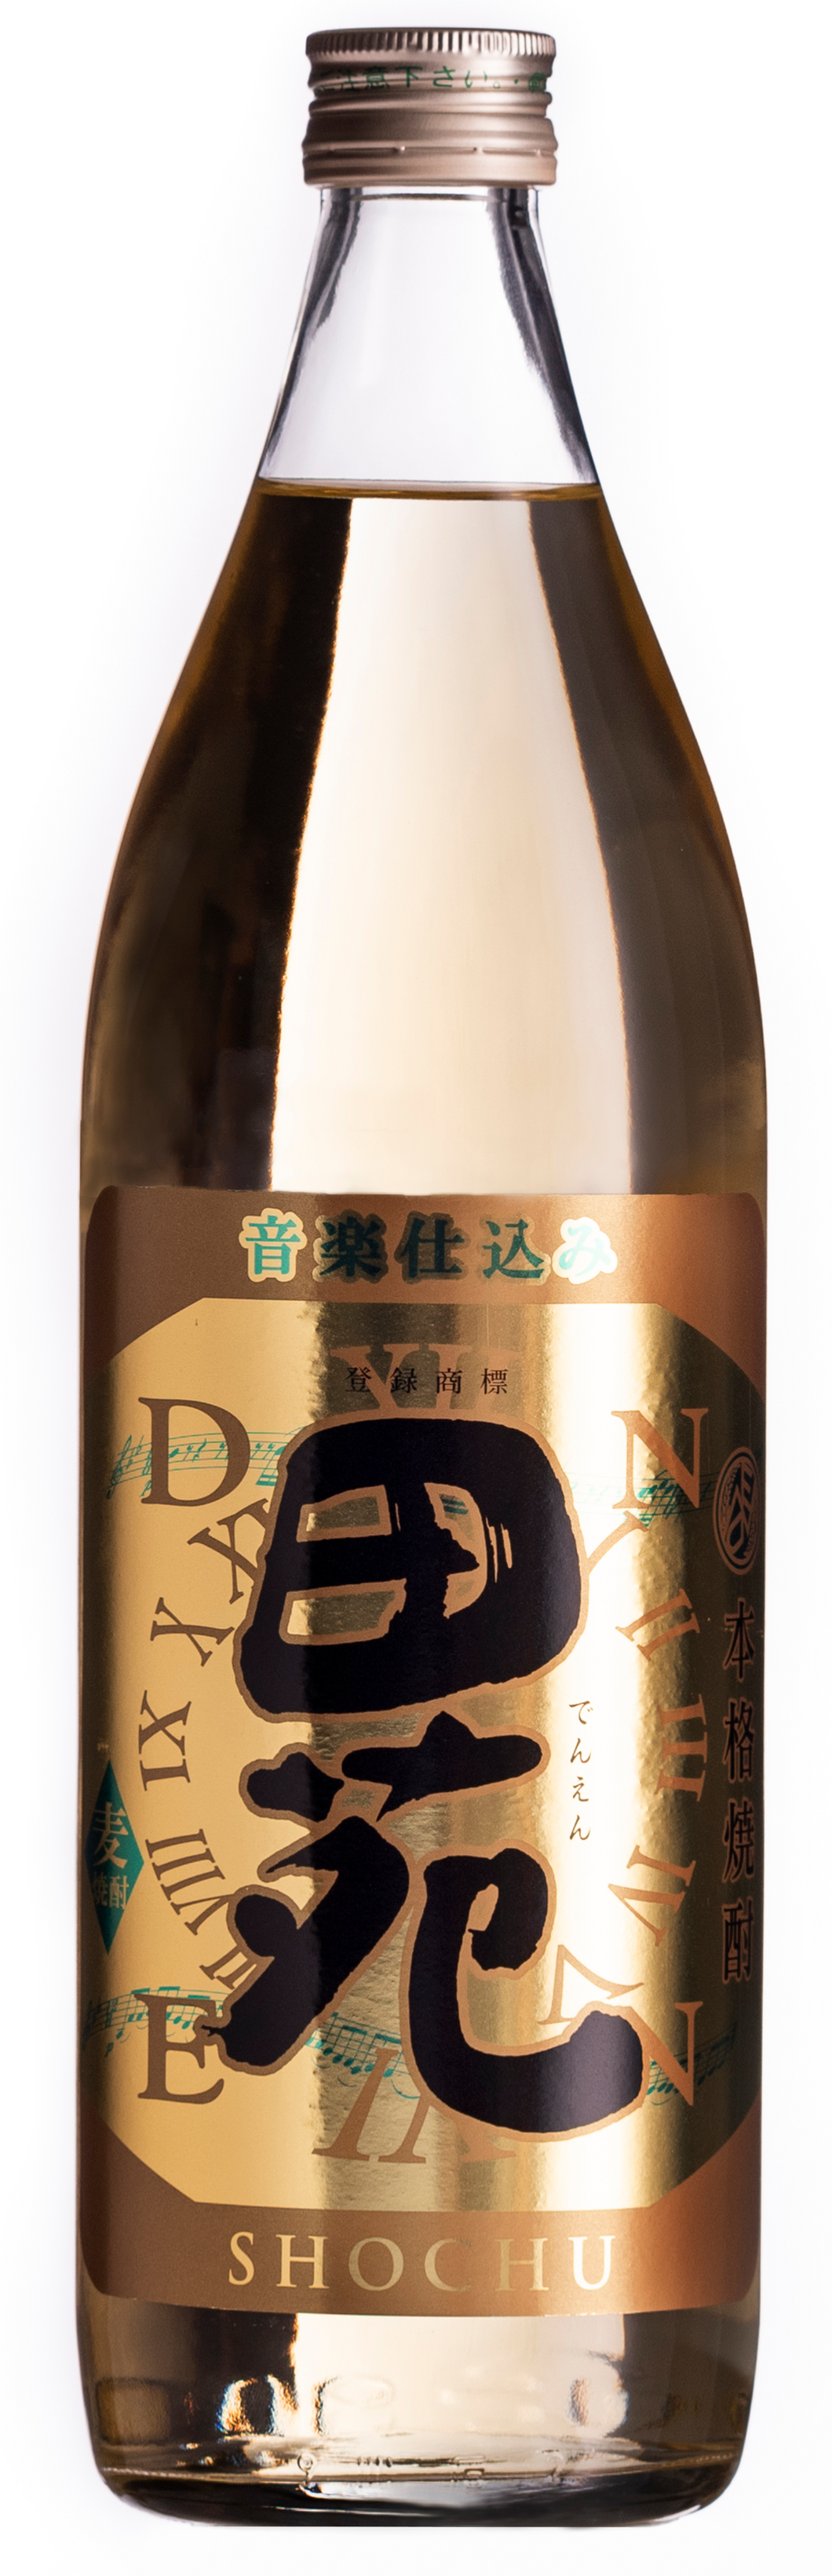 DEN-EN Aged Barley Shochu Kin (Gold) Label 900 ML